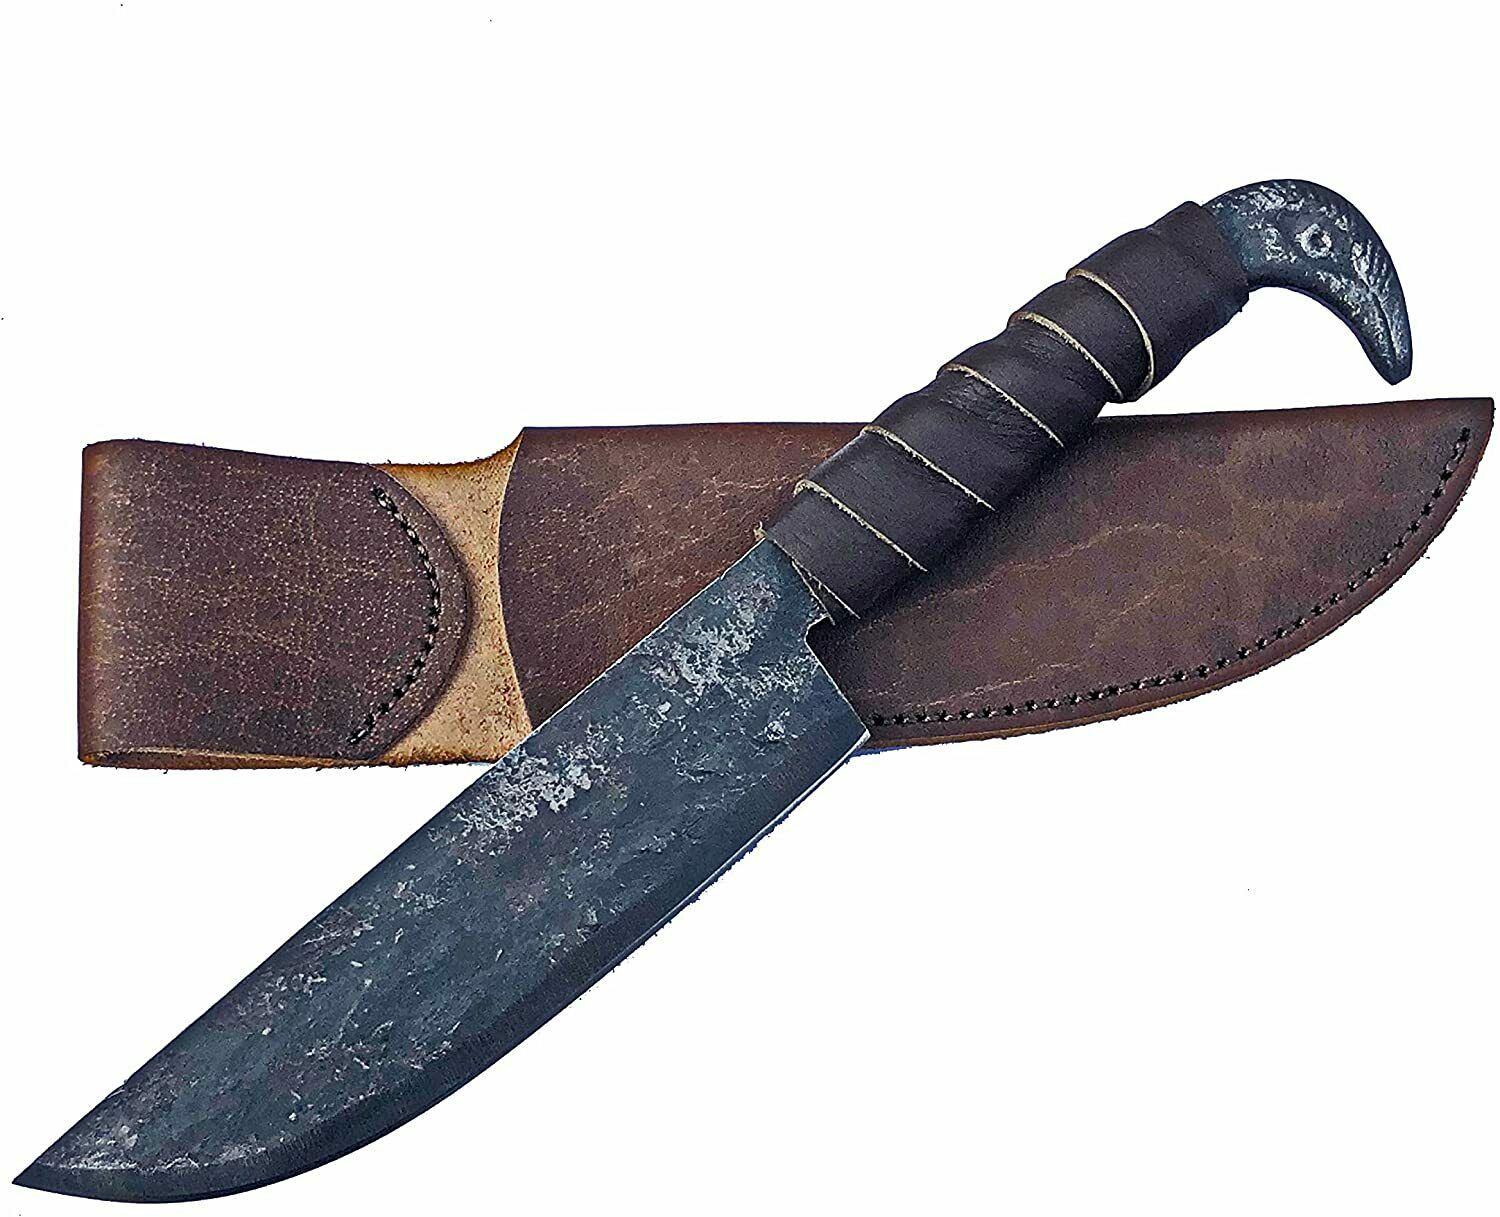 Raven Hilt Knife - 5.5 Blade (13 cm)